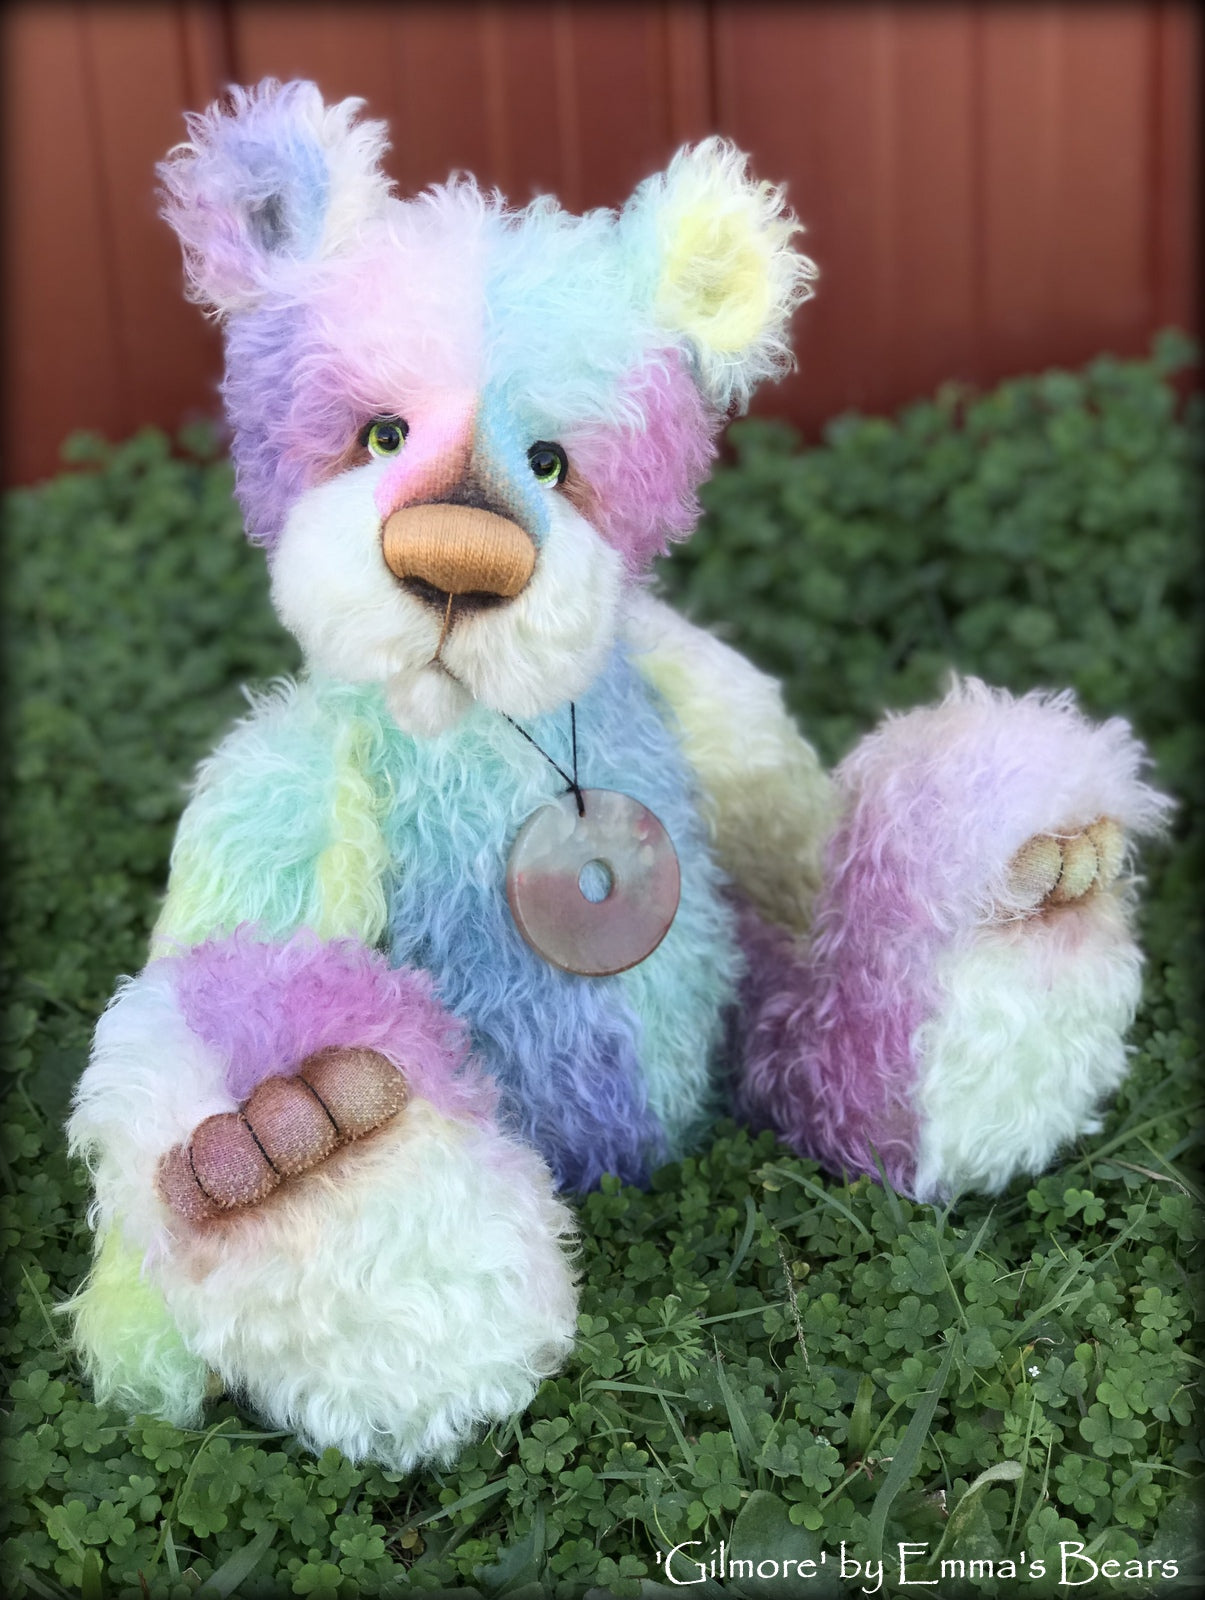 Gilmore - 18" Hand-Dyed rainbow Artist Bear by Emma's Bears - OOAK